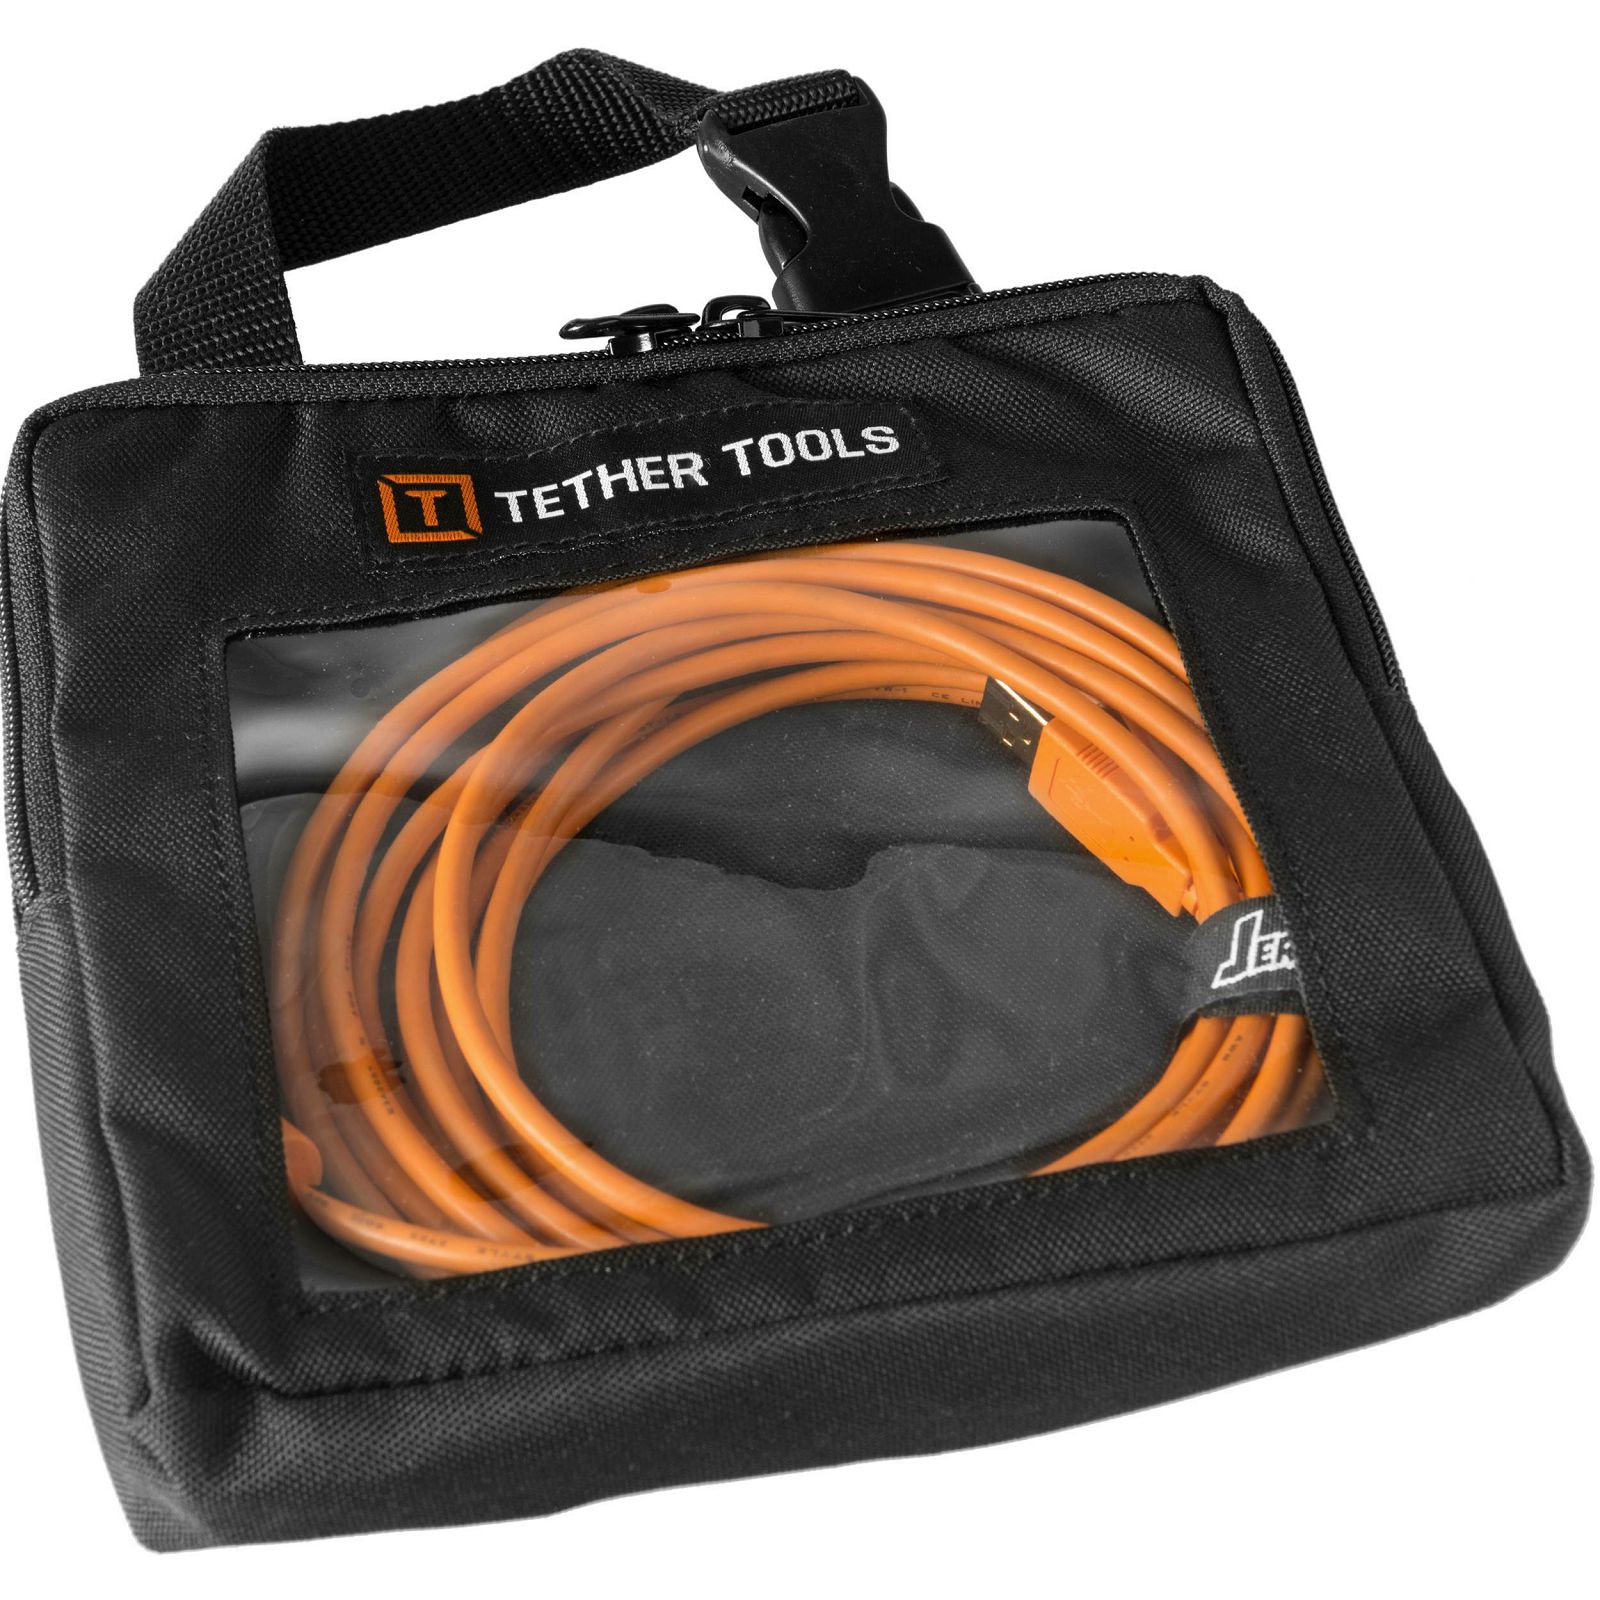 Tether tools. Tether Tools кабель для фотоаппарата. TETHERPRO. Tеthеrрrо Tеthеr tооls. Tether Case.